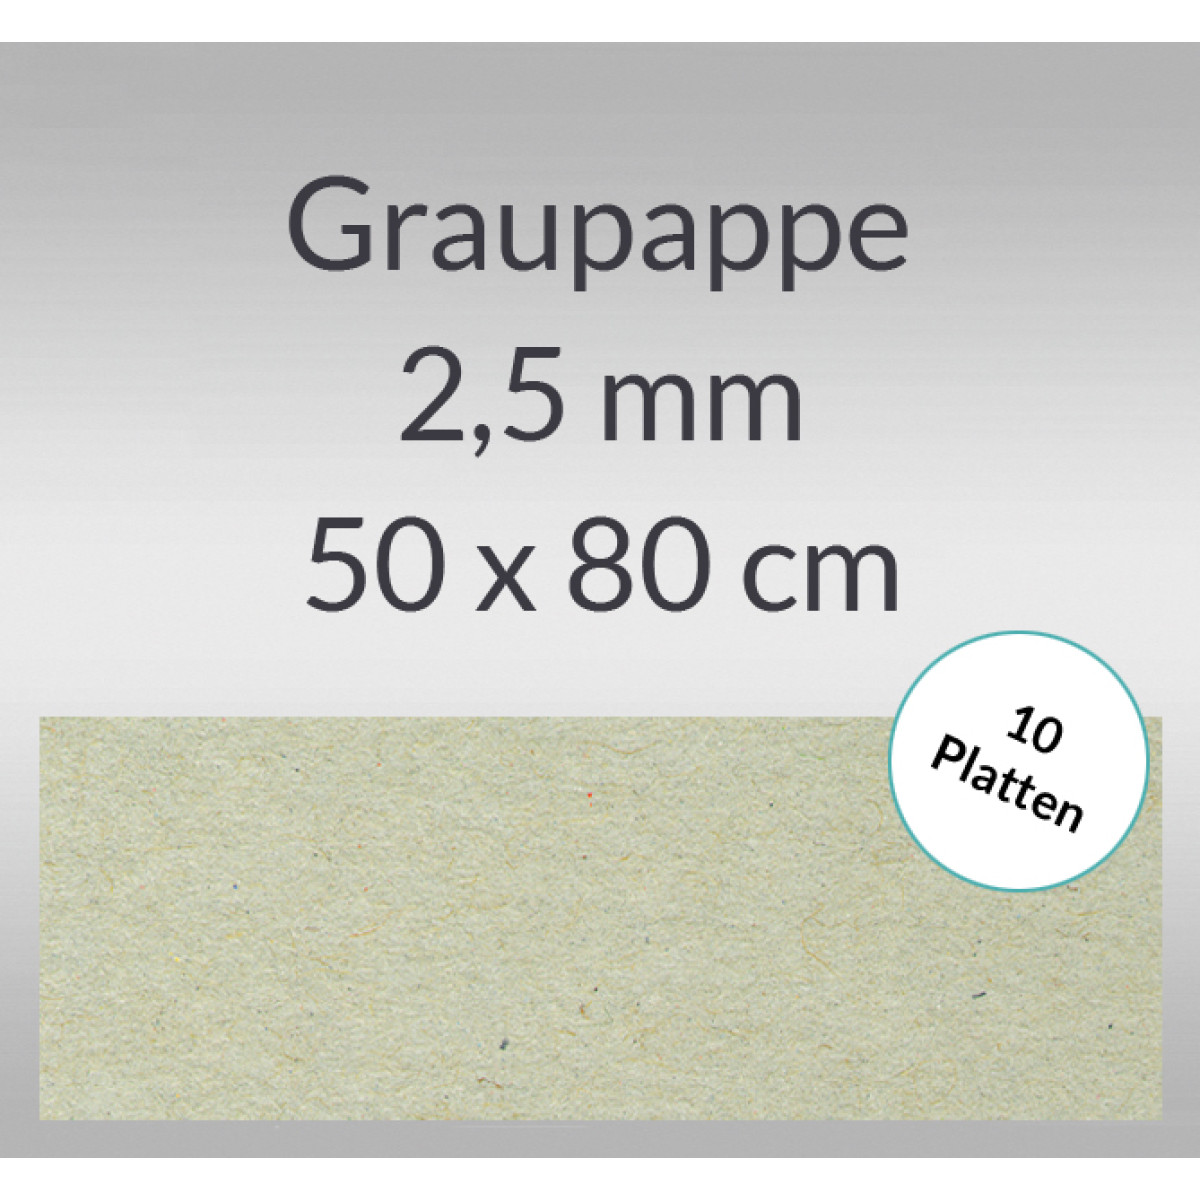 Graupappe 50 x 80 cm - 2,5 mm